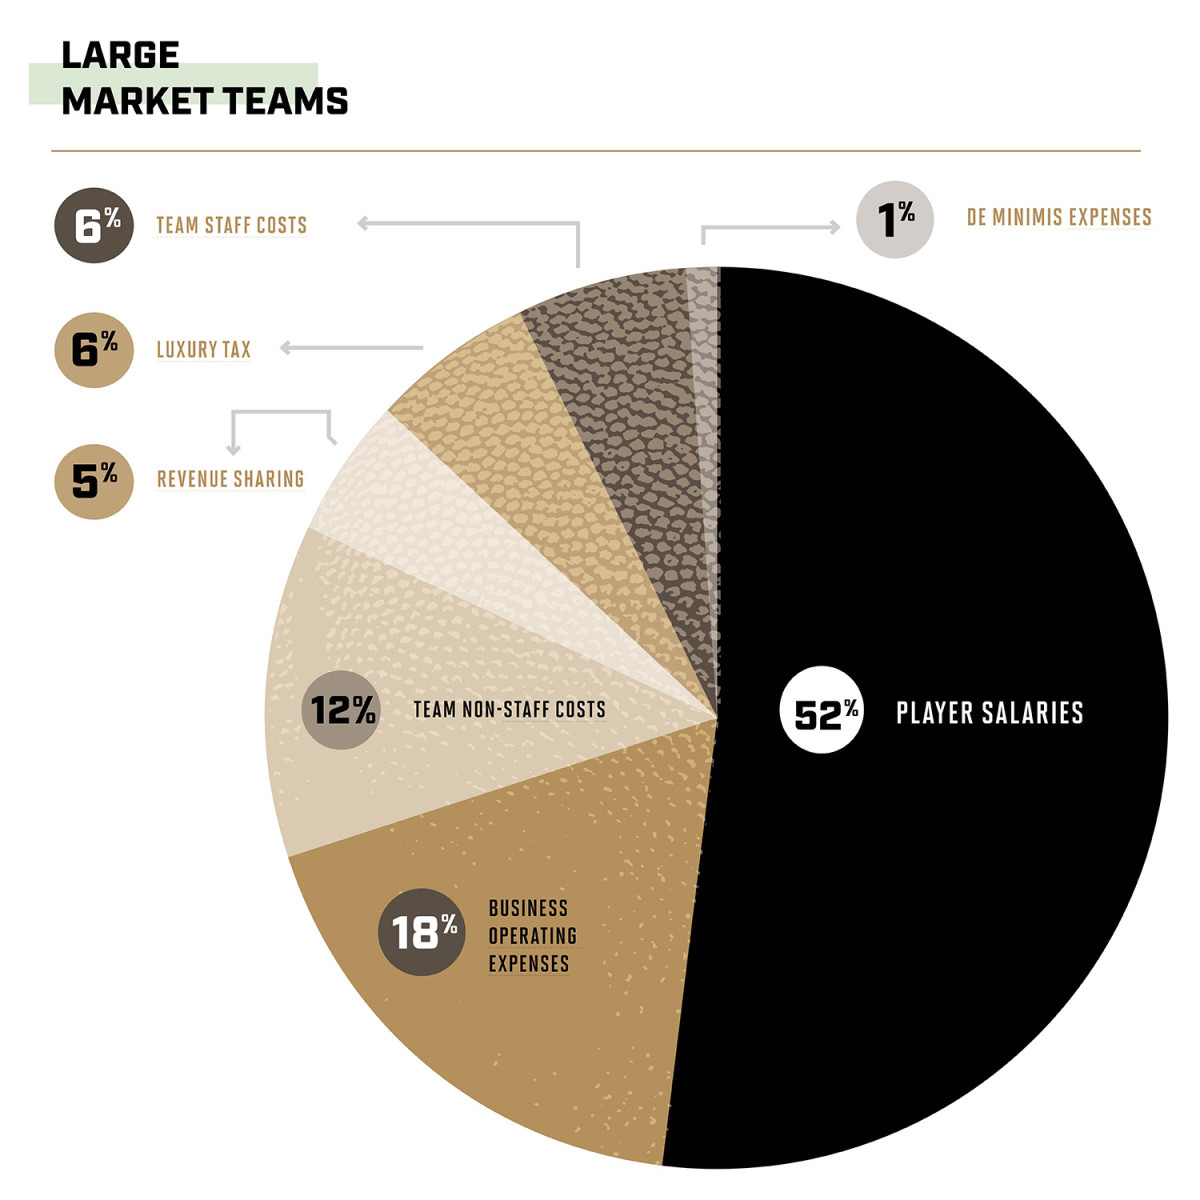 NBA posts record season for sponsorship revenue